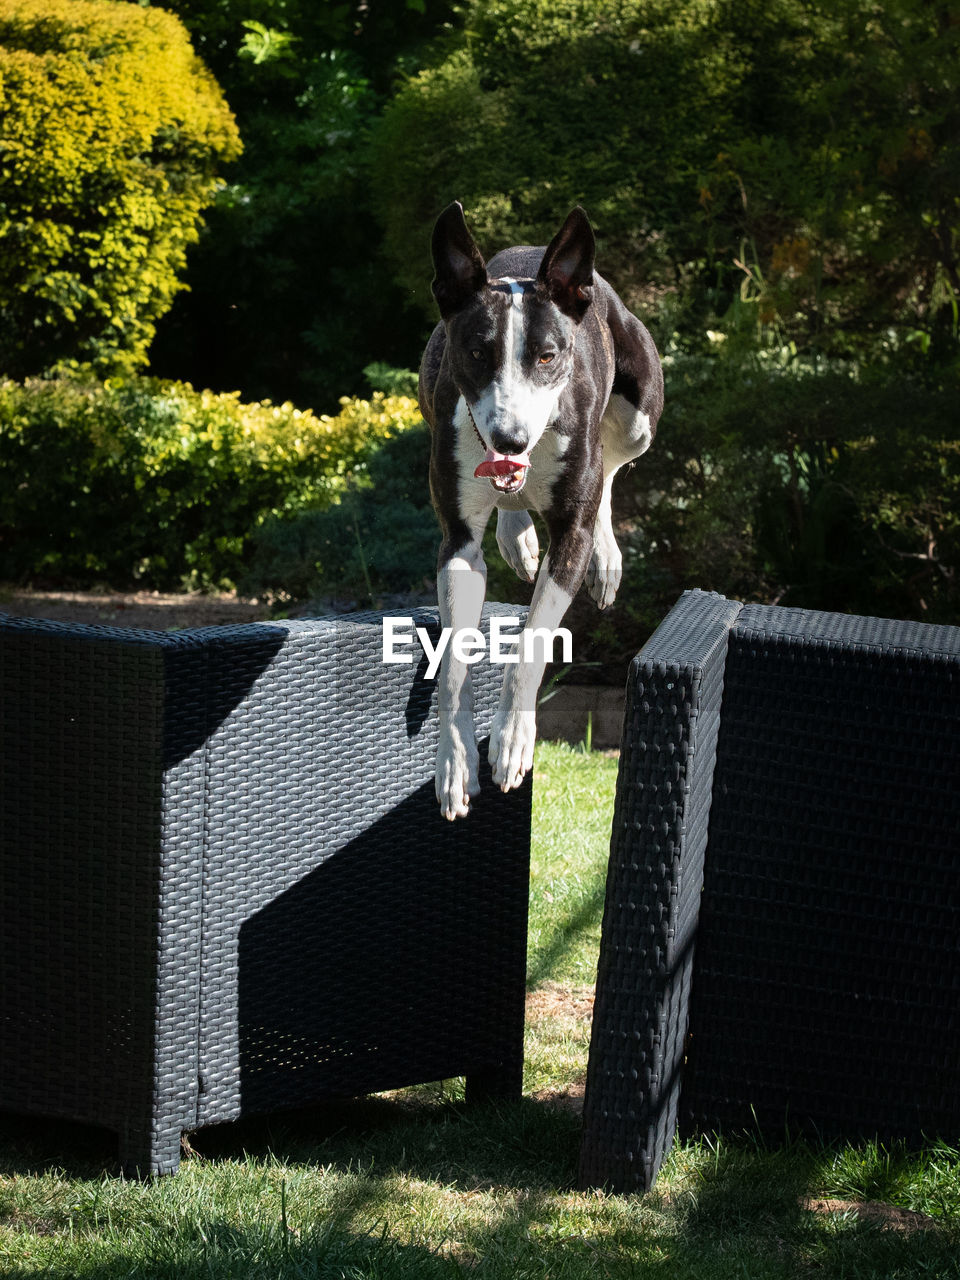 Lurcher jumping over hurdles in a garden